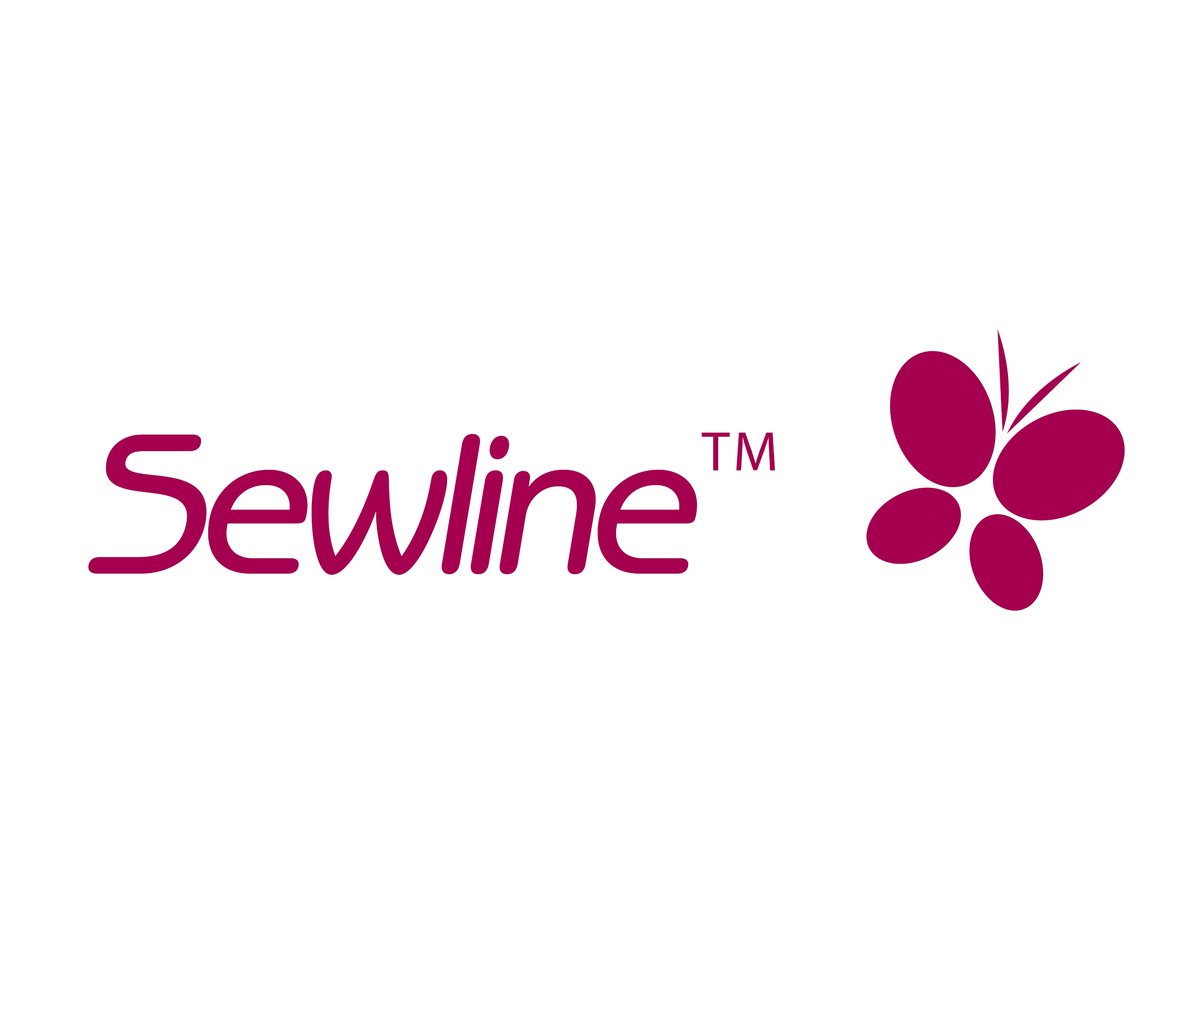 Sewline – Tilkkunen